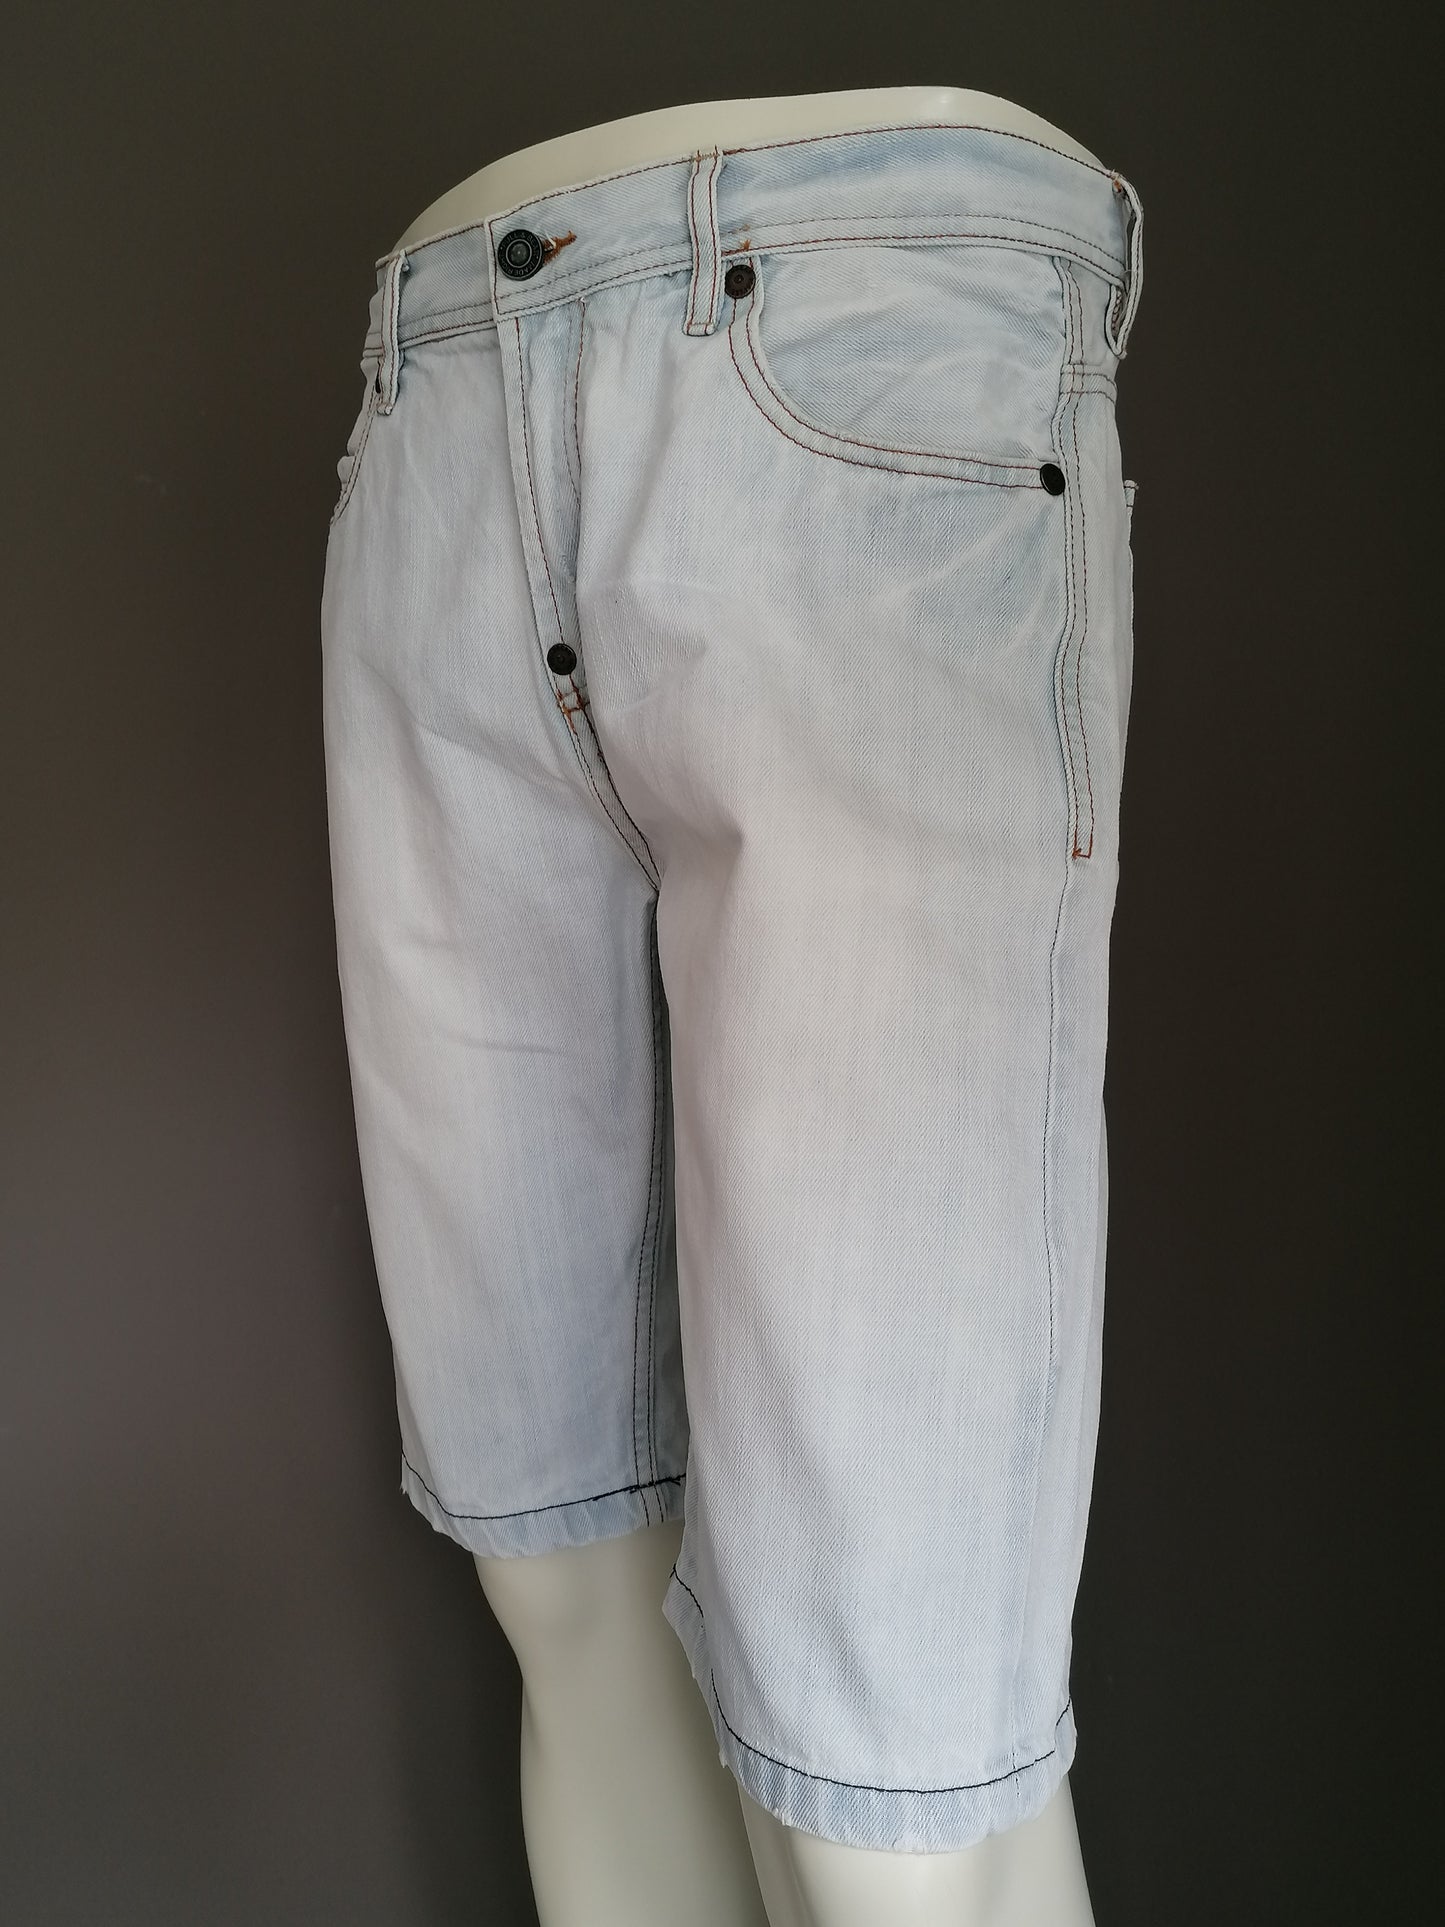 Pull & Bear korte broek jeans. Blauw gekleurd. Maat W32.